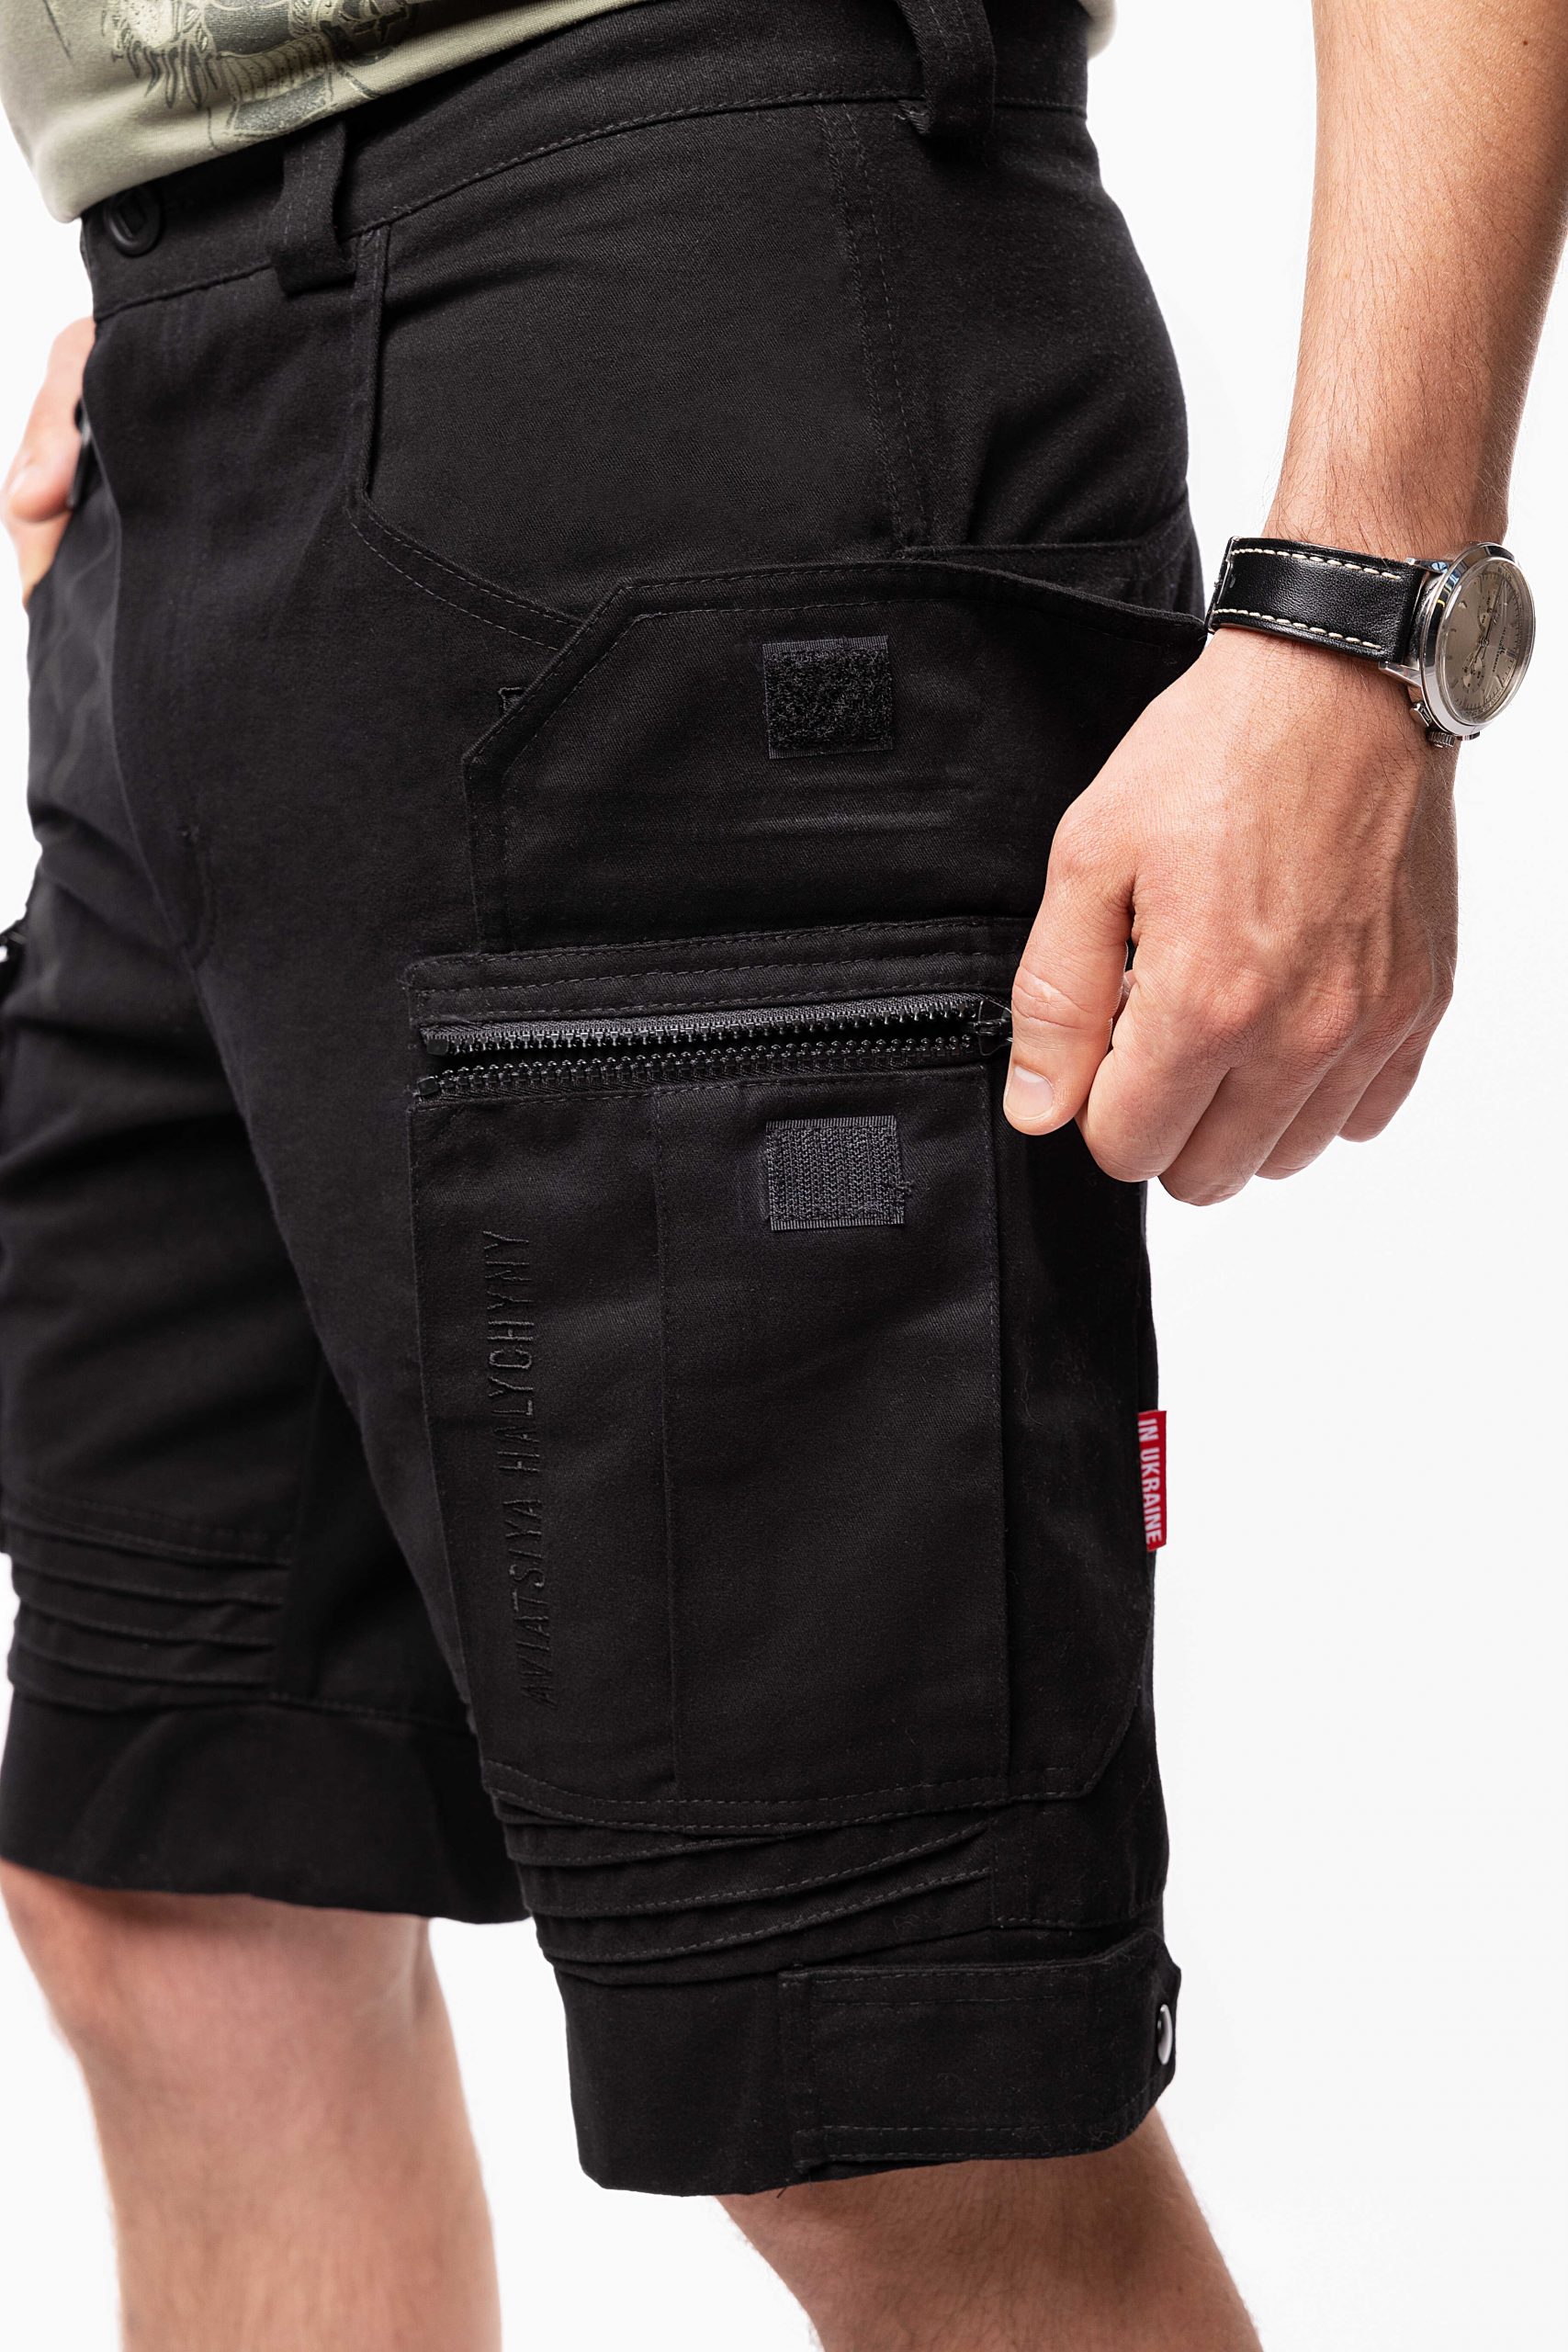 Men's Shorts Flyer. Color black. 7.